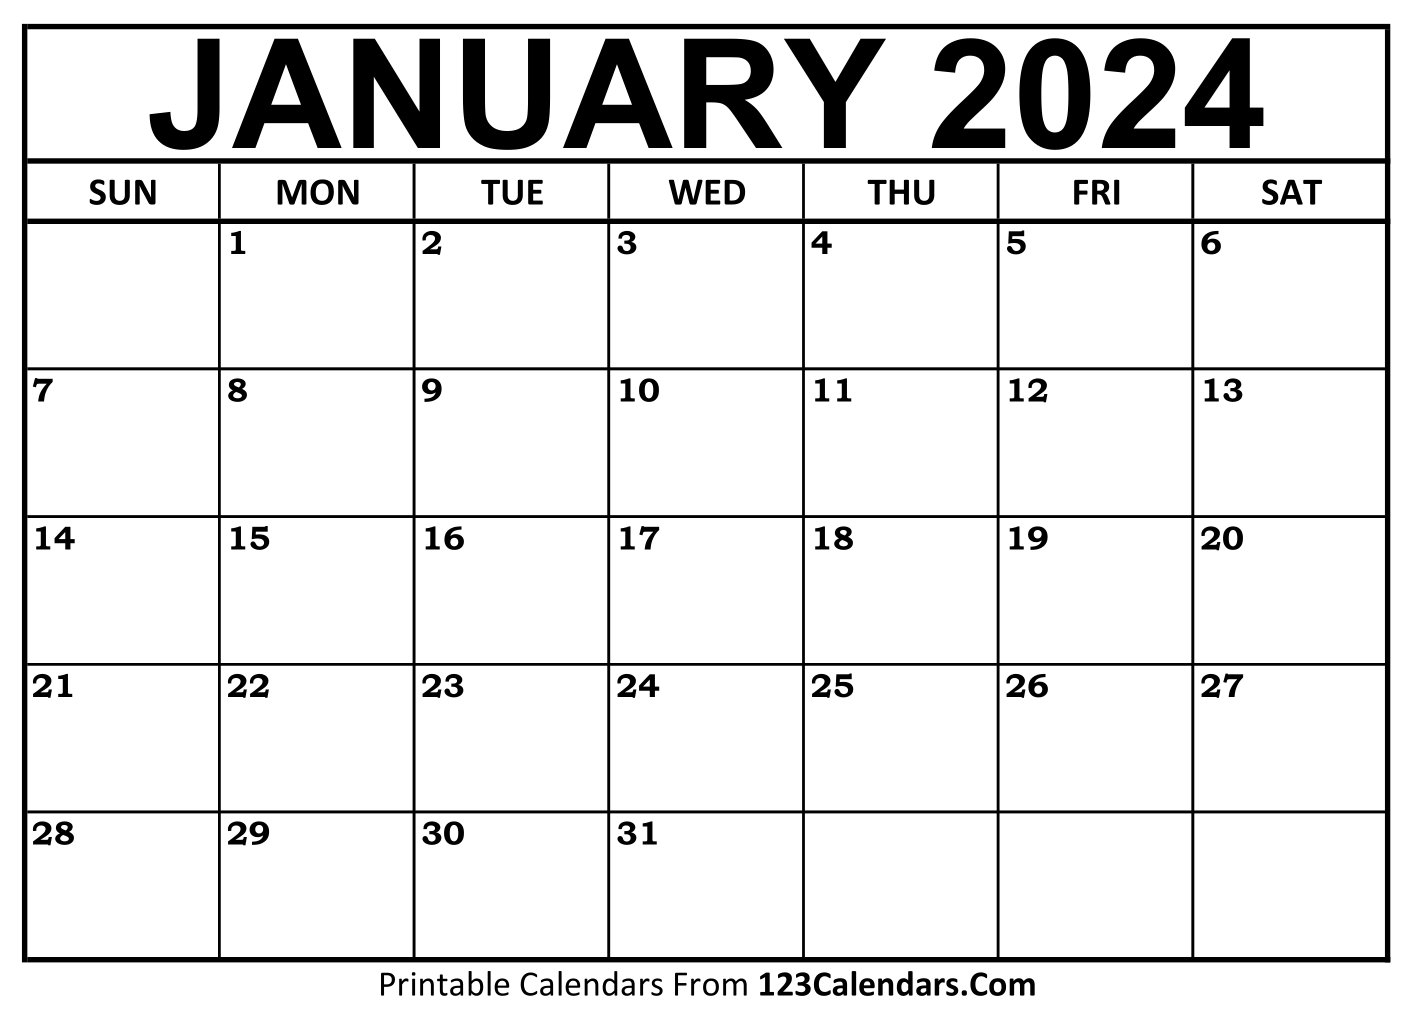 Printable January 2024 Calendar Templates - 123Calendars for Printable Calendar Free January 2024